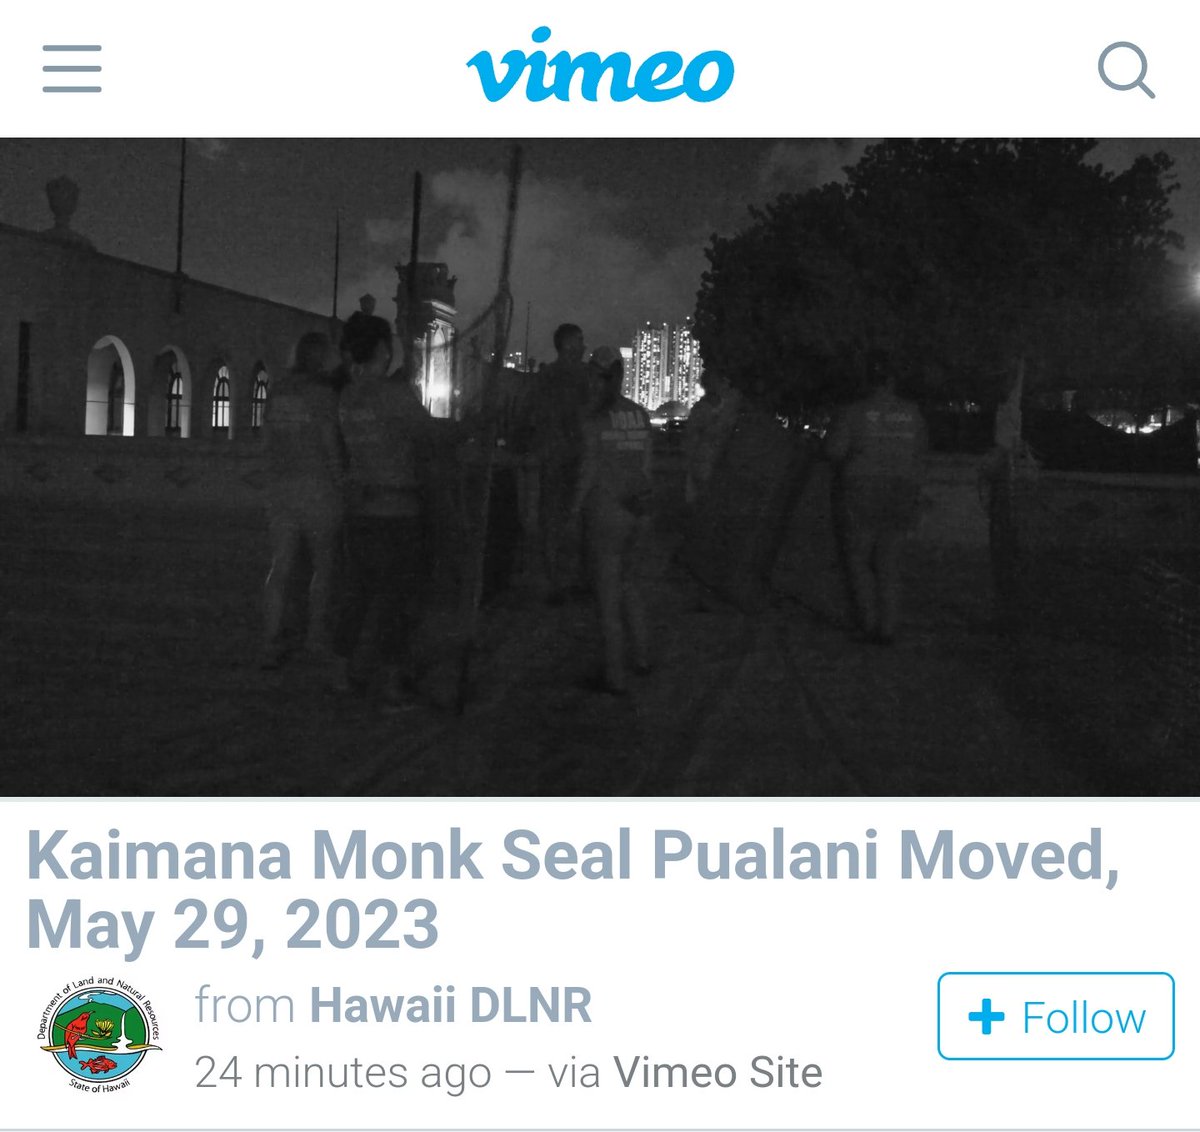 Pualani was moved out of Kaimana Beach tonight vimeo.com/831408428  #HawaiianMonkSeal 🦭 #Pualani